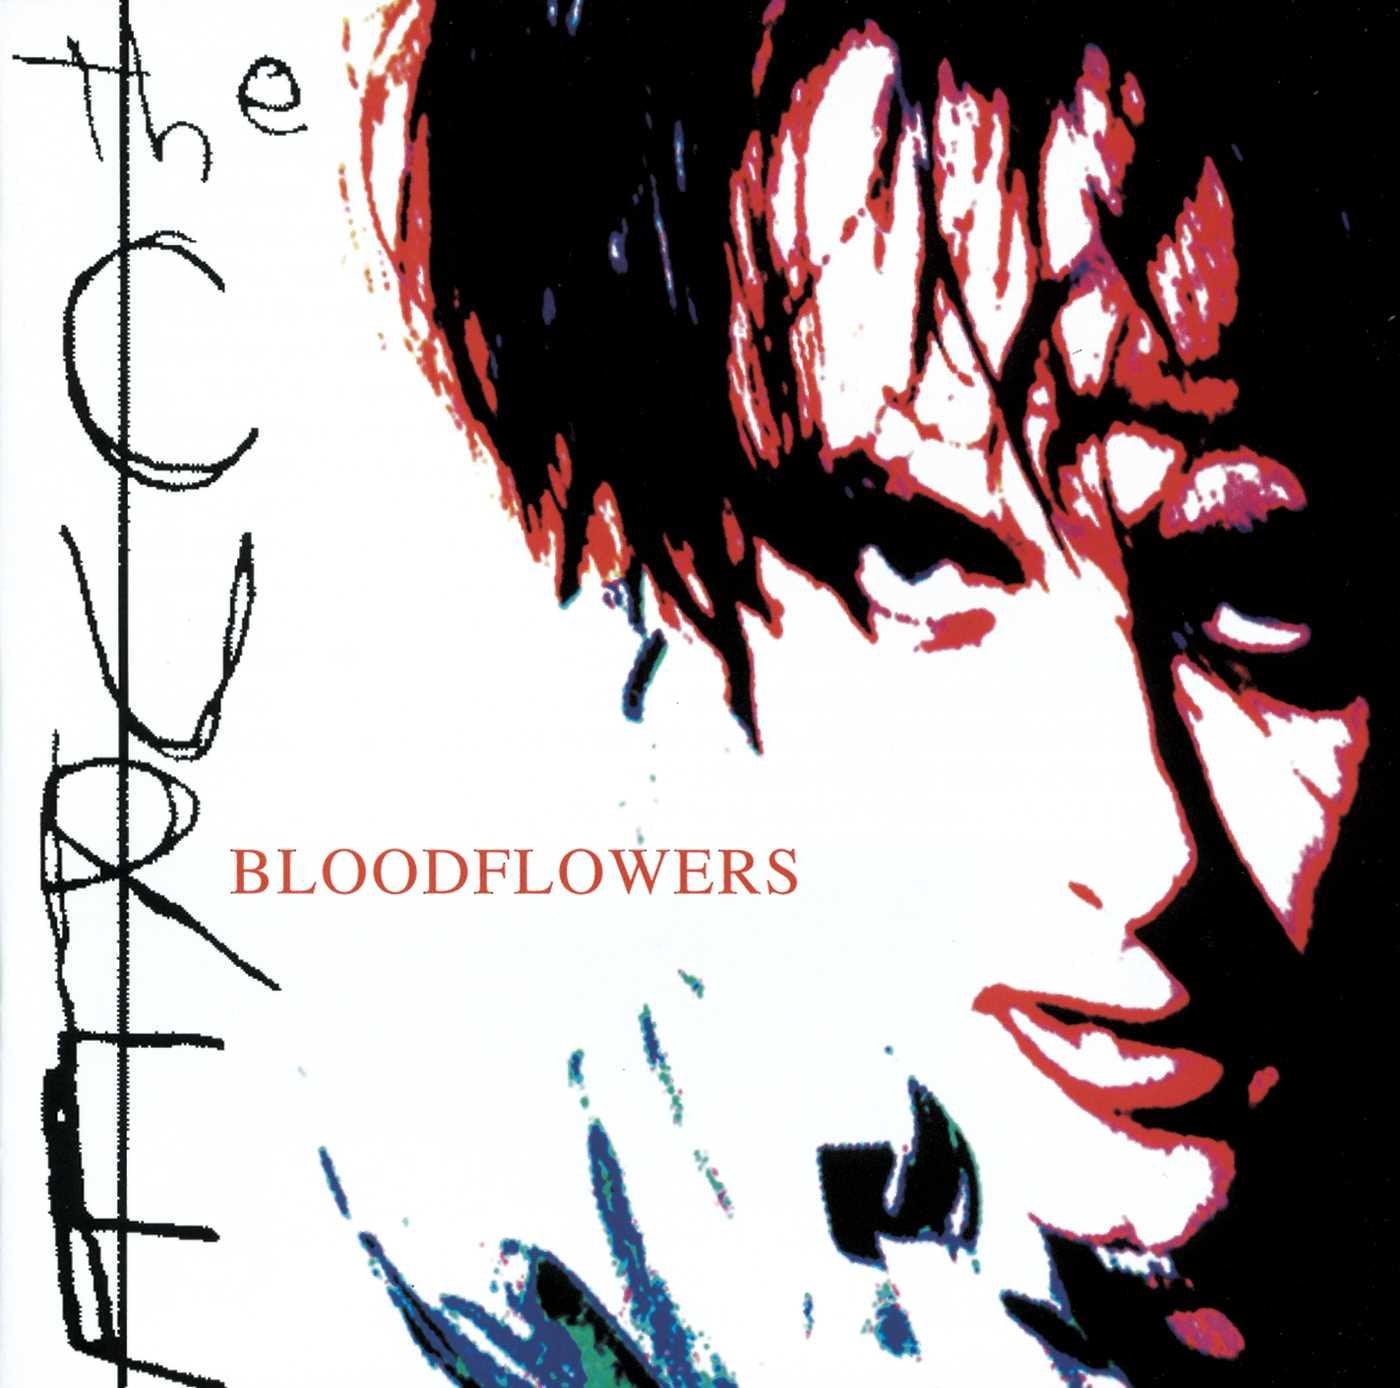 You are currently viewing Godišnjica objavljivanja albuma Bloodflowers goth-rock sastava The Cure